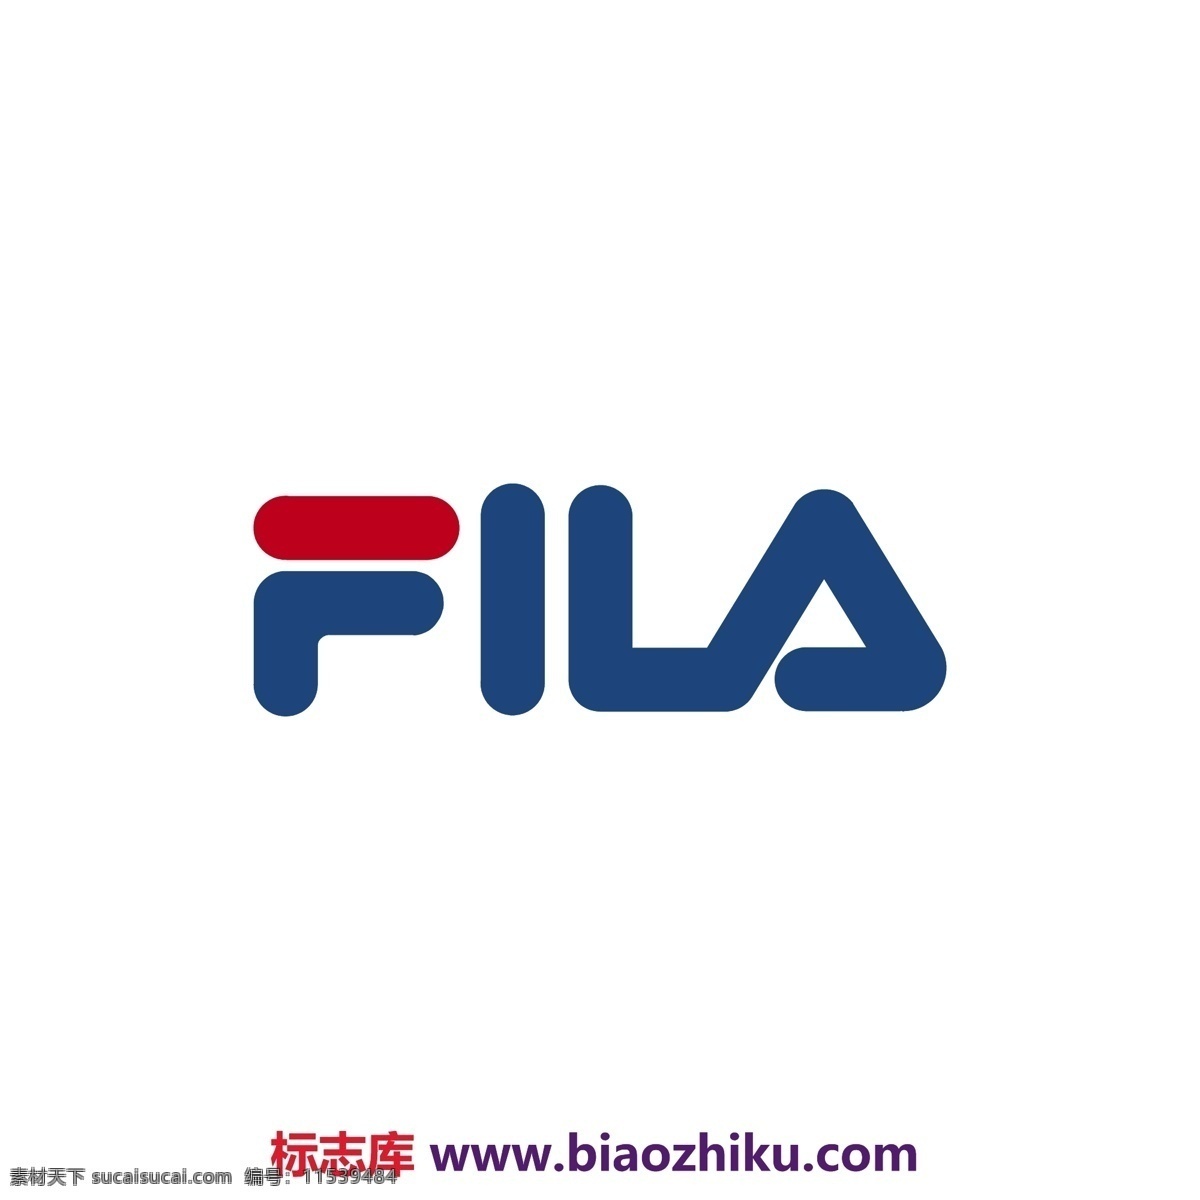 fila logo大全 logo 设计欣赏 商业矢量 矢量下载 菲拉 标志设计 欣赏 网页矢量 矢量图 其他矢量图